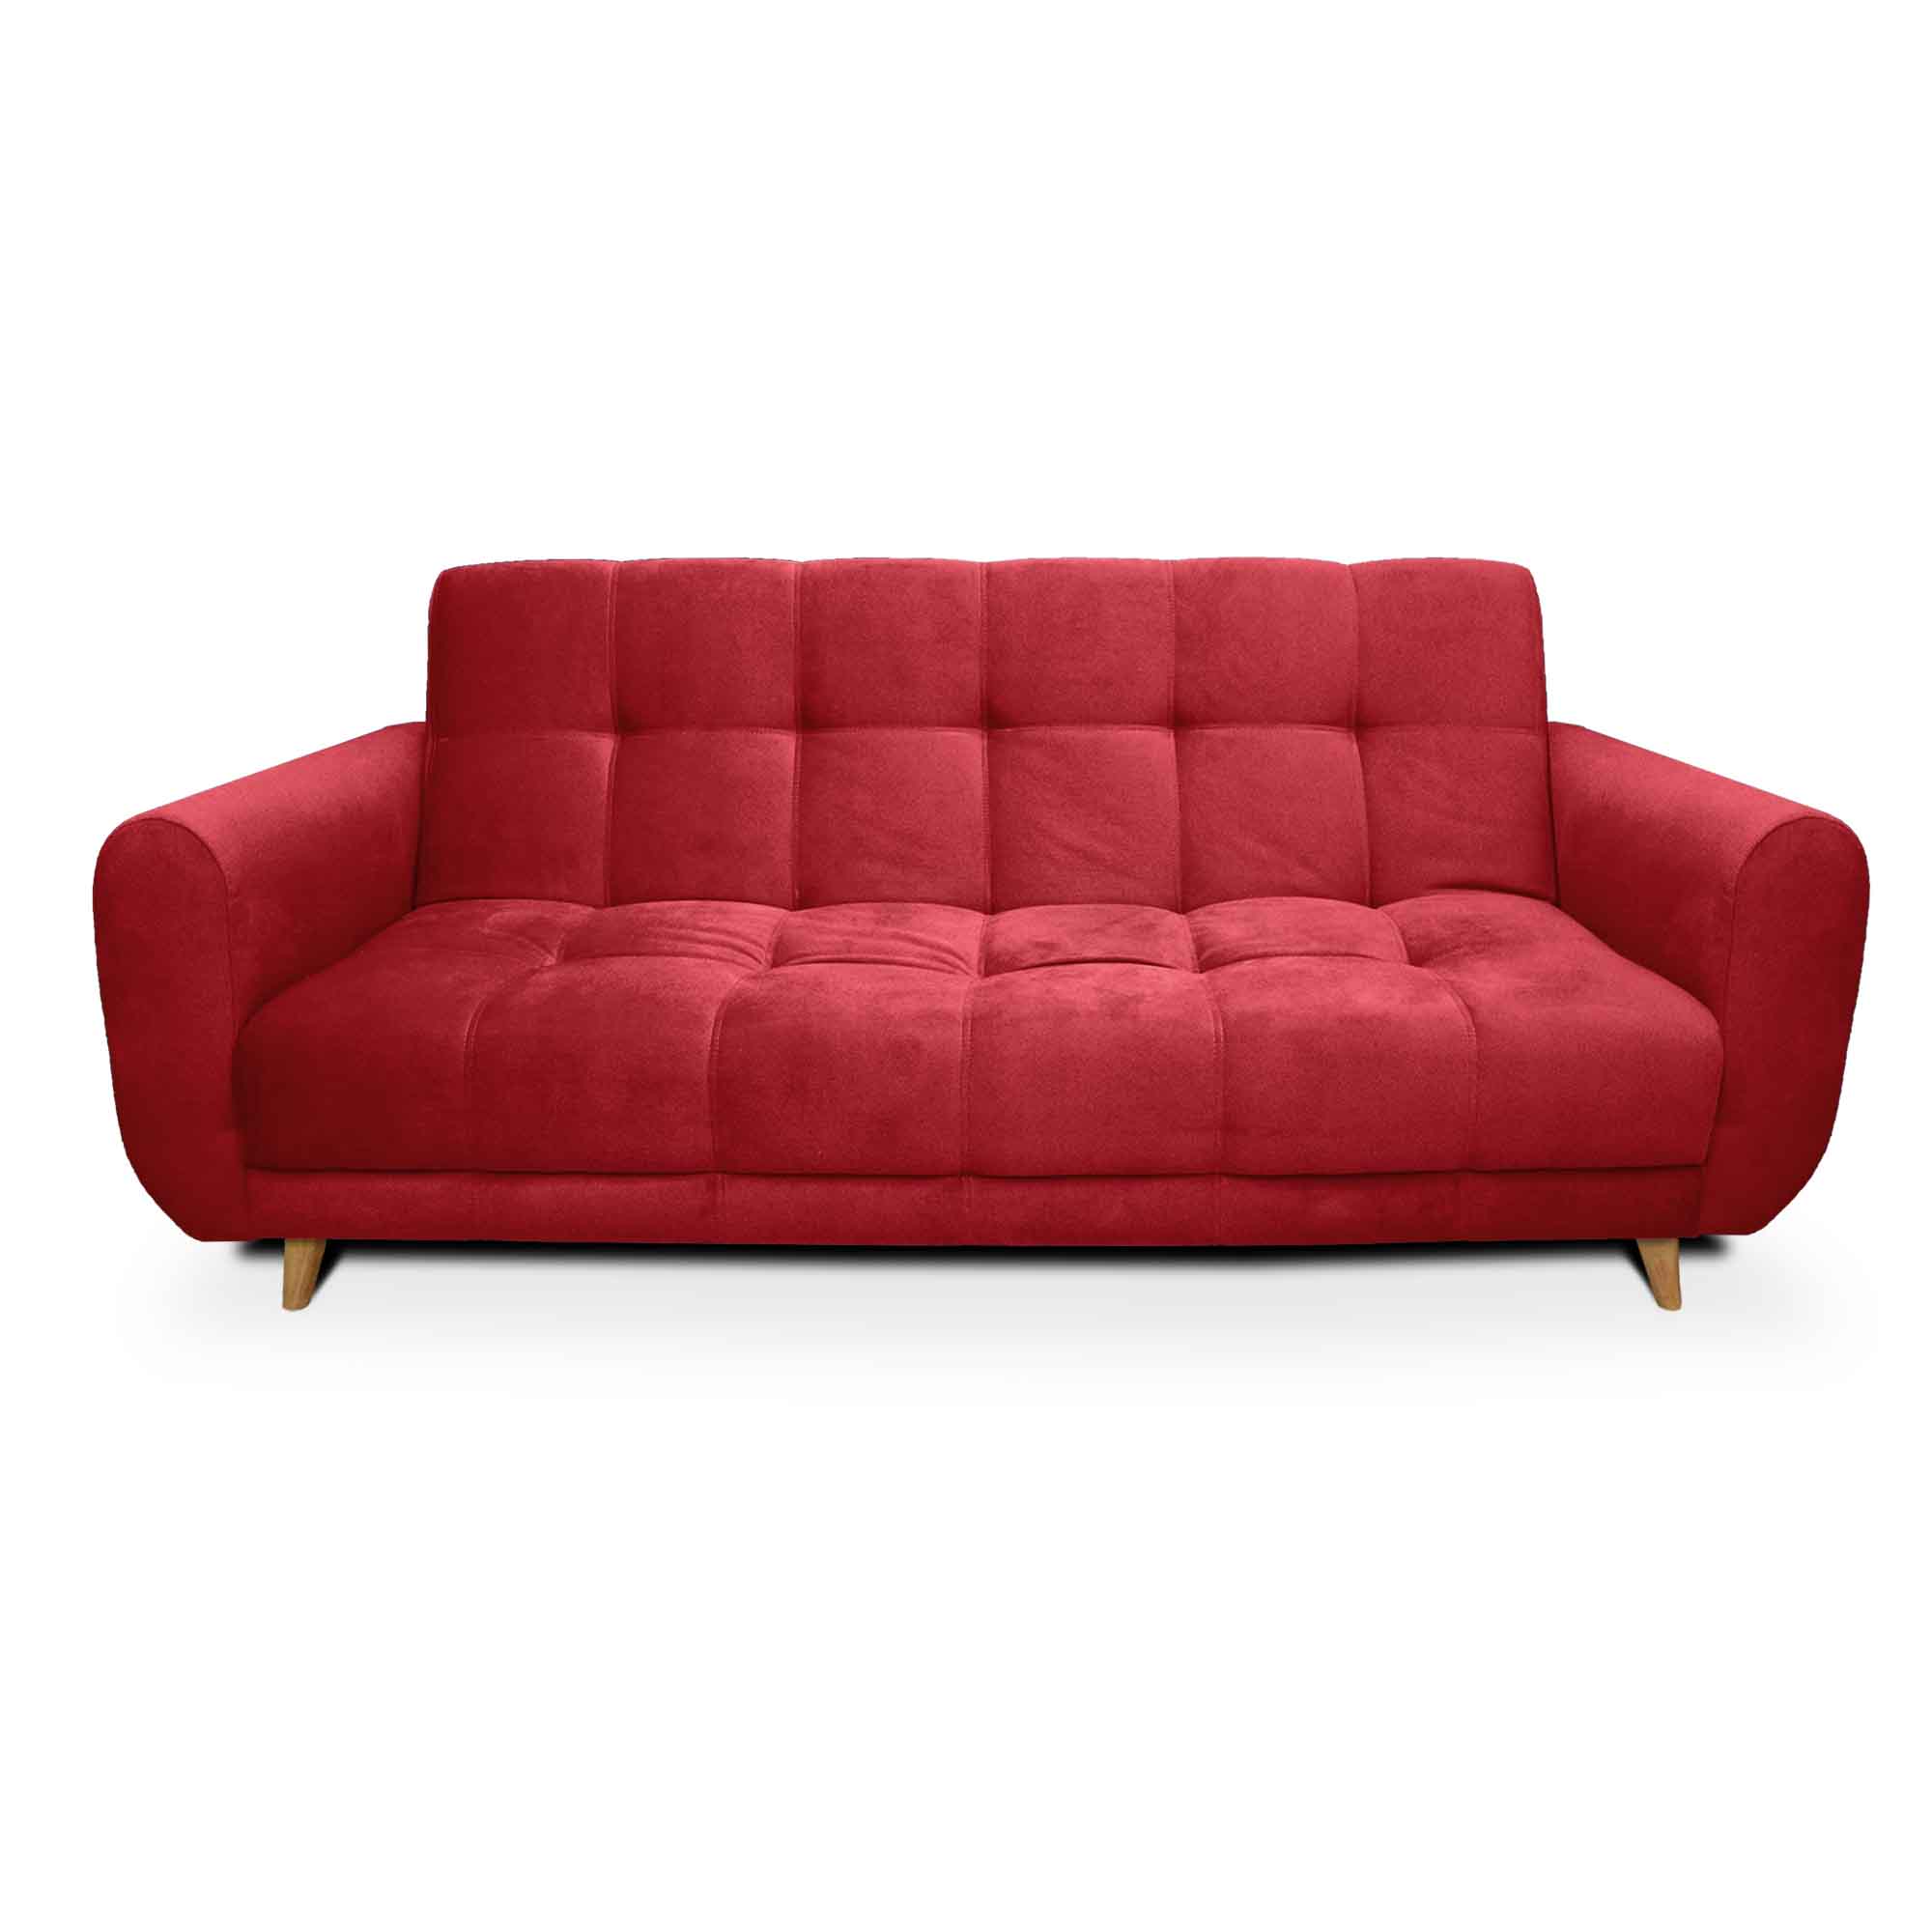 Sofa Cama Comfort Sistema Clic Clac Color Rojo (1)